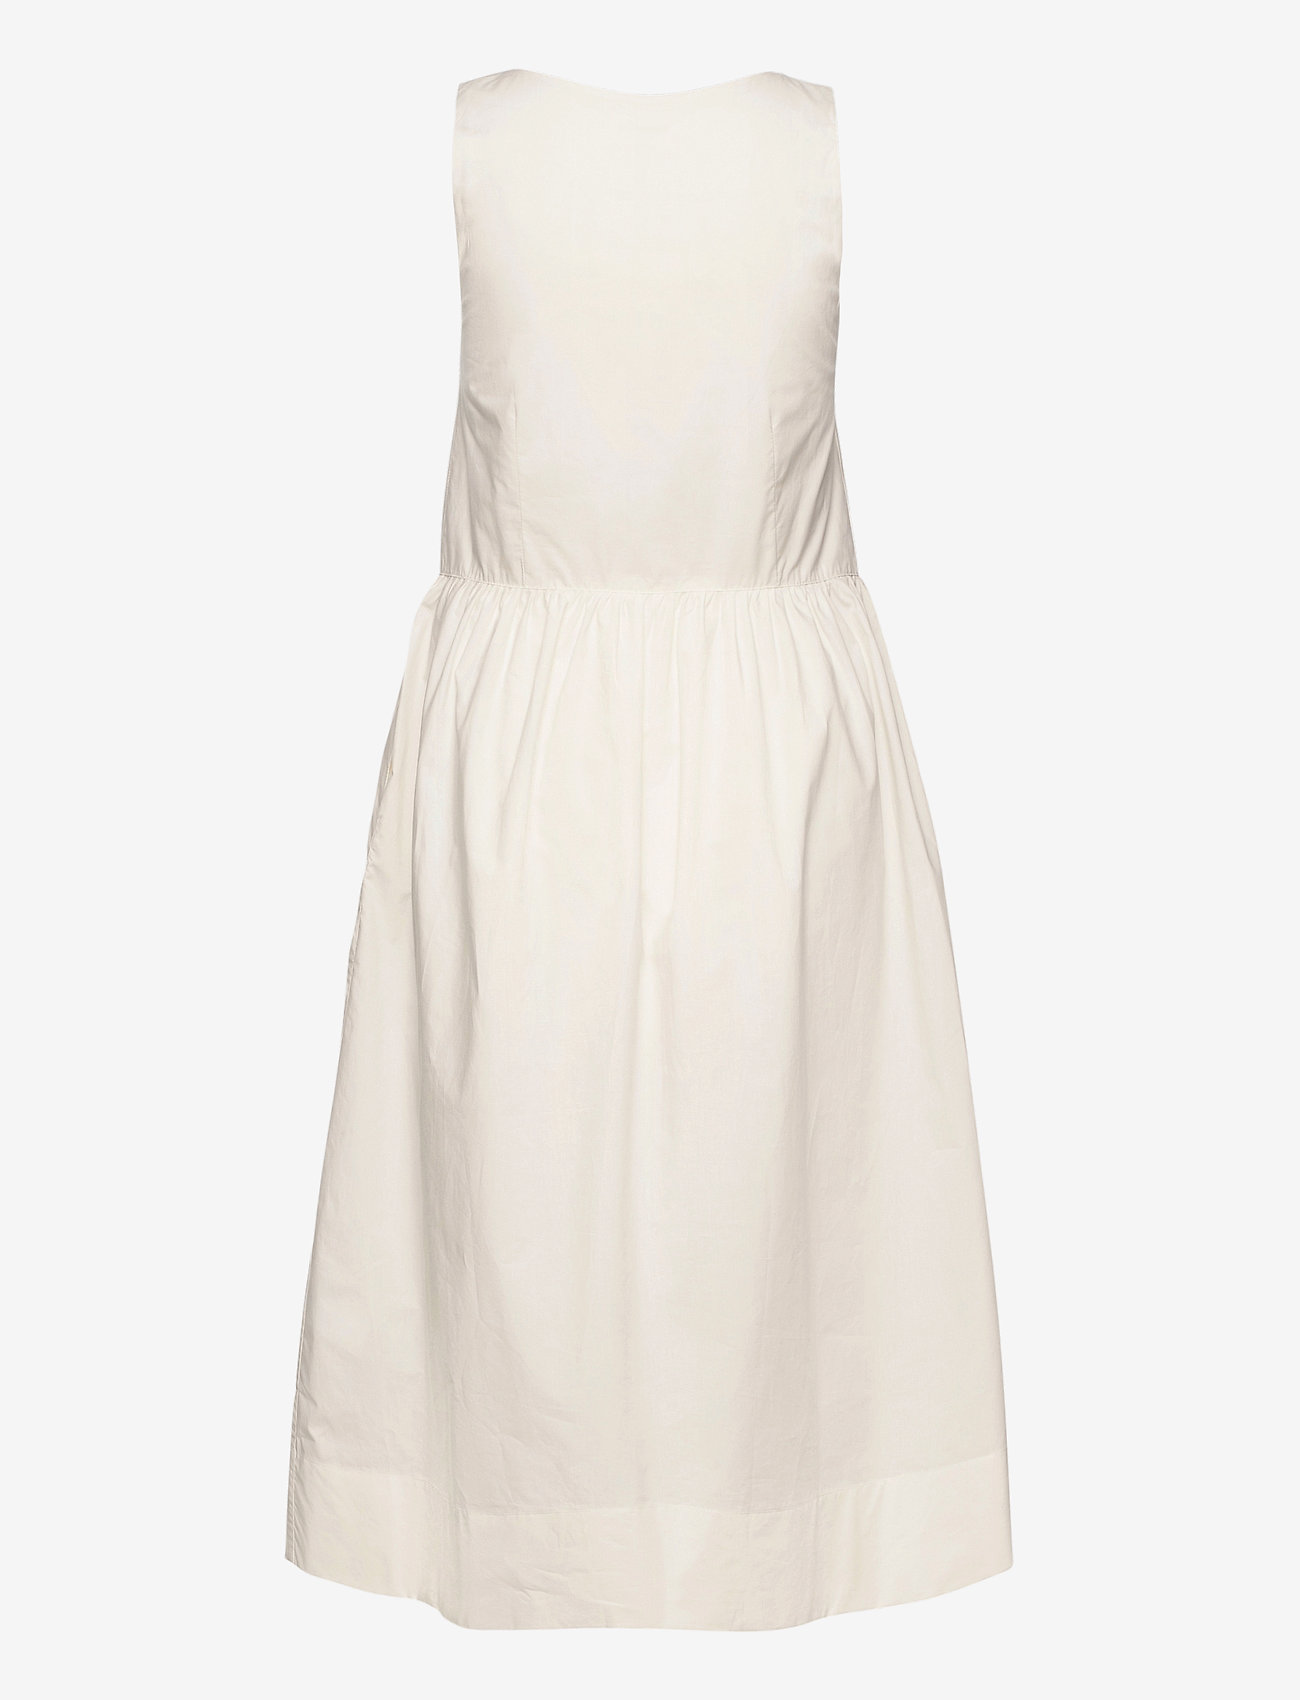 Wood Wood - Tenna poplin dress - ballīšu apģērbs par outlet cenām - off-white - 1